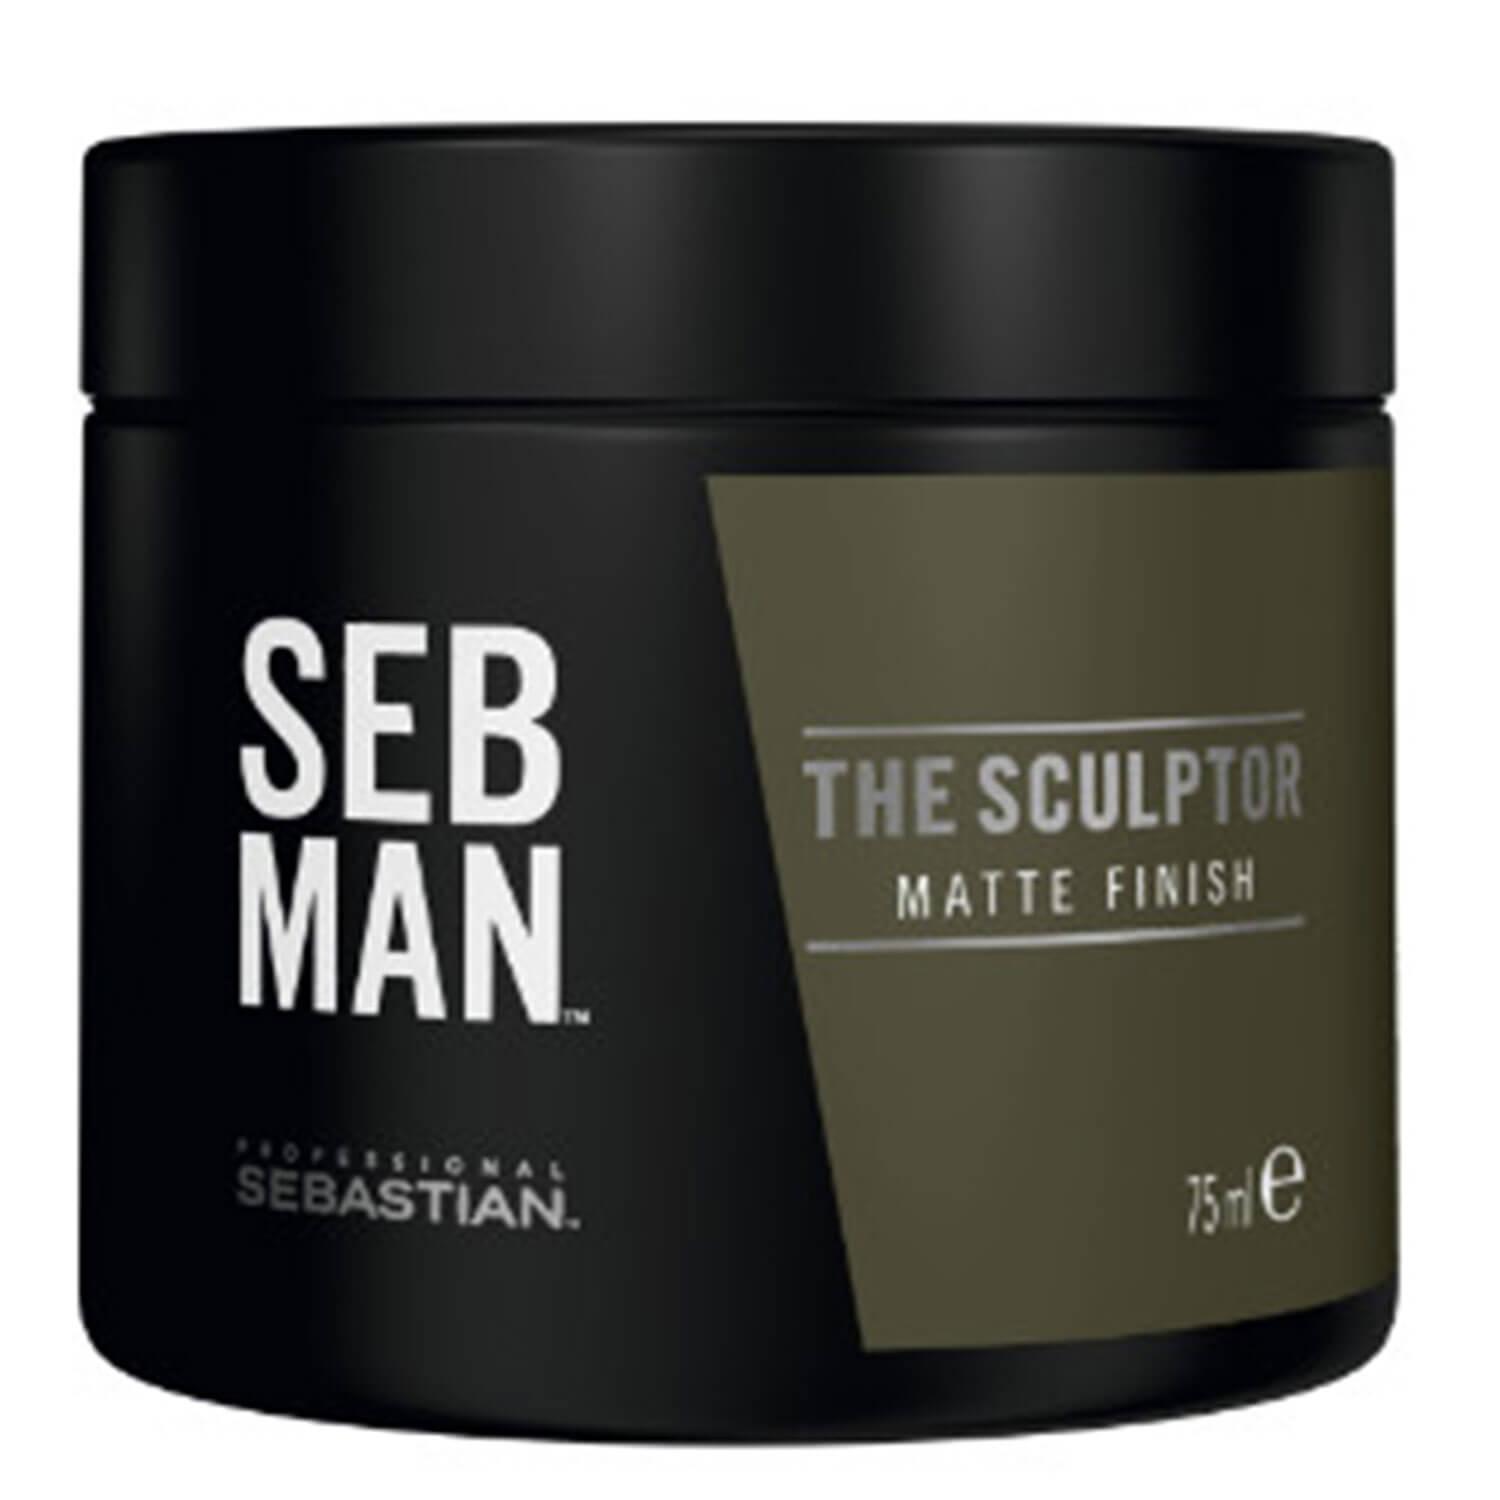 SEB MAN - The Sculptor Matte Finish